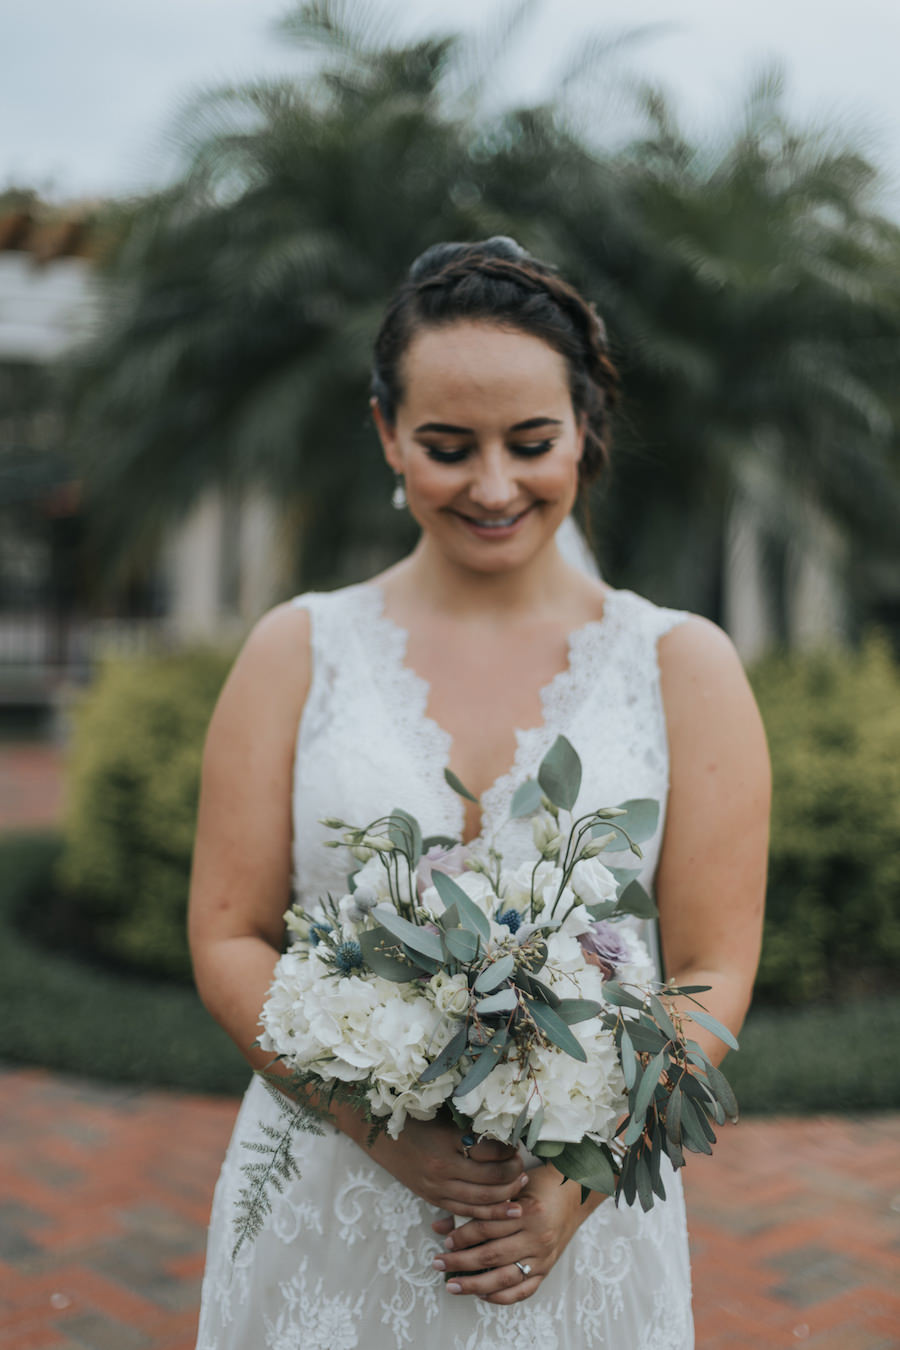 Bridal Wedding Portrait in Sleeveless Ivory Lace Wedding Dress with Ivory, Purple and Greenery Bridal Wedding Bouquet with Eucalyptus | Tampa Bay Wedding Florist Wonderland Floral Art